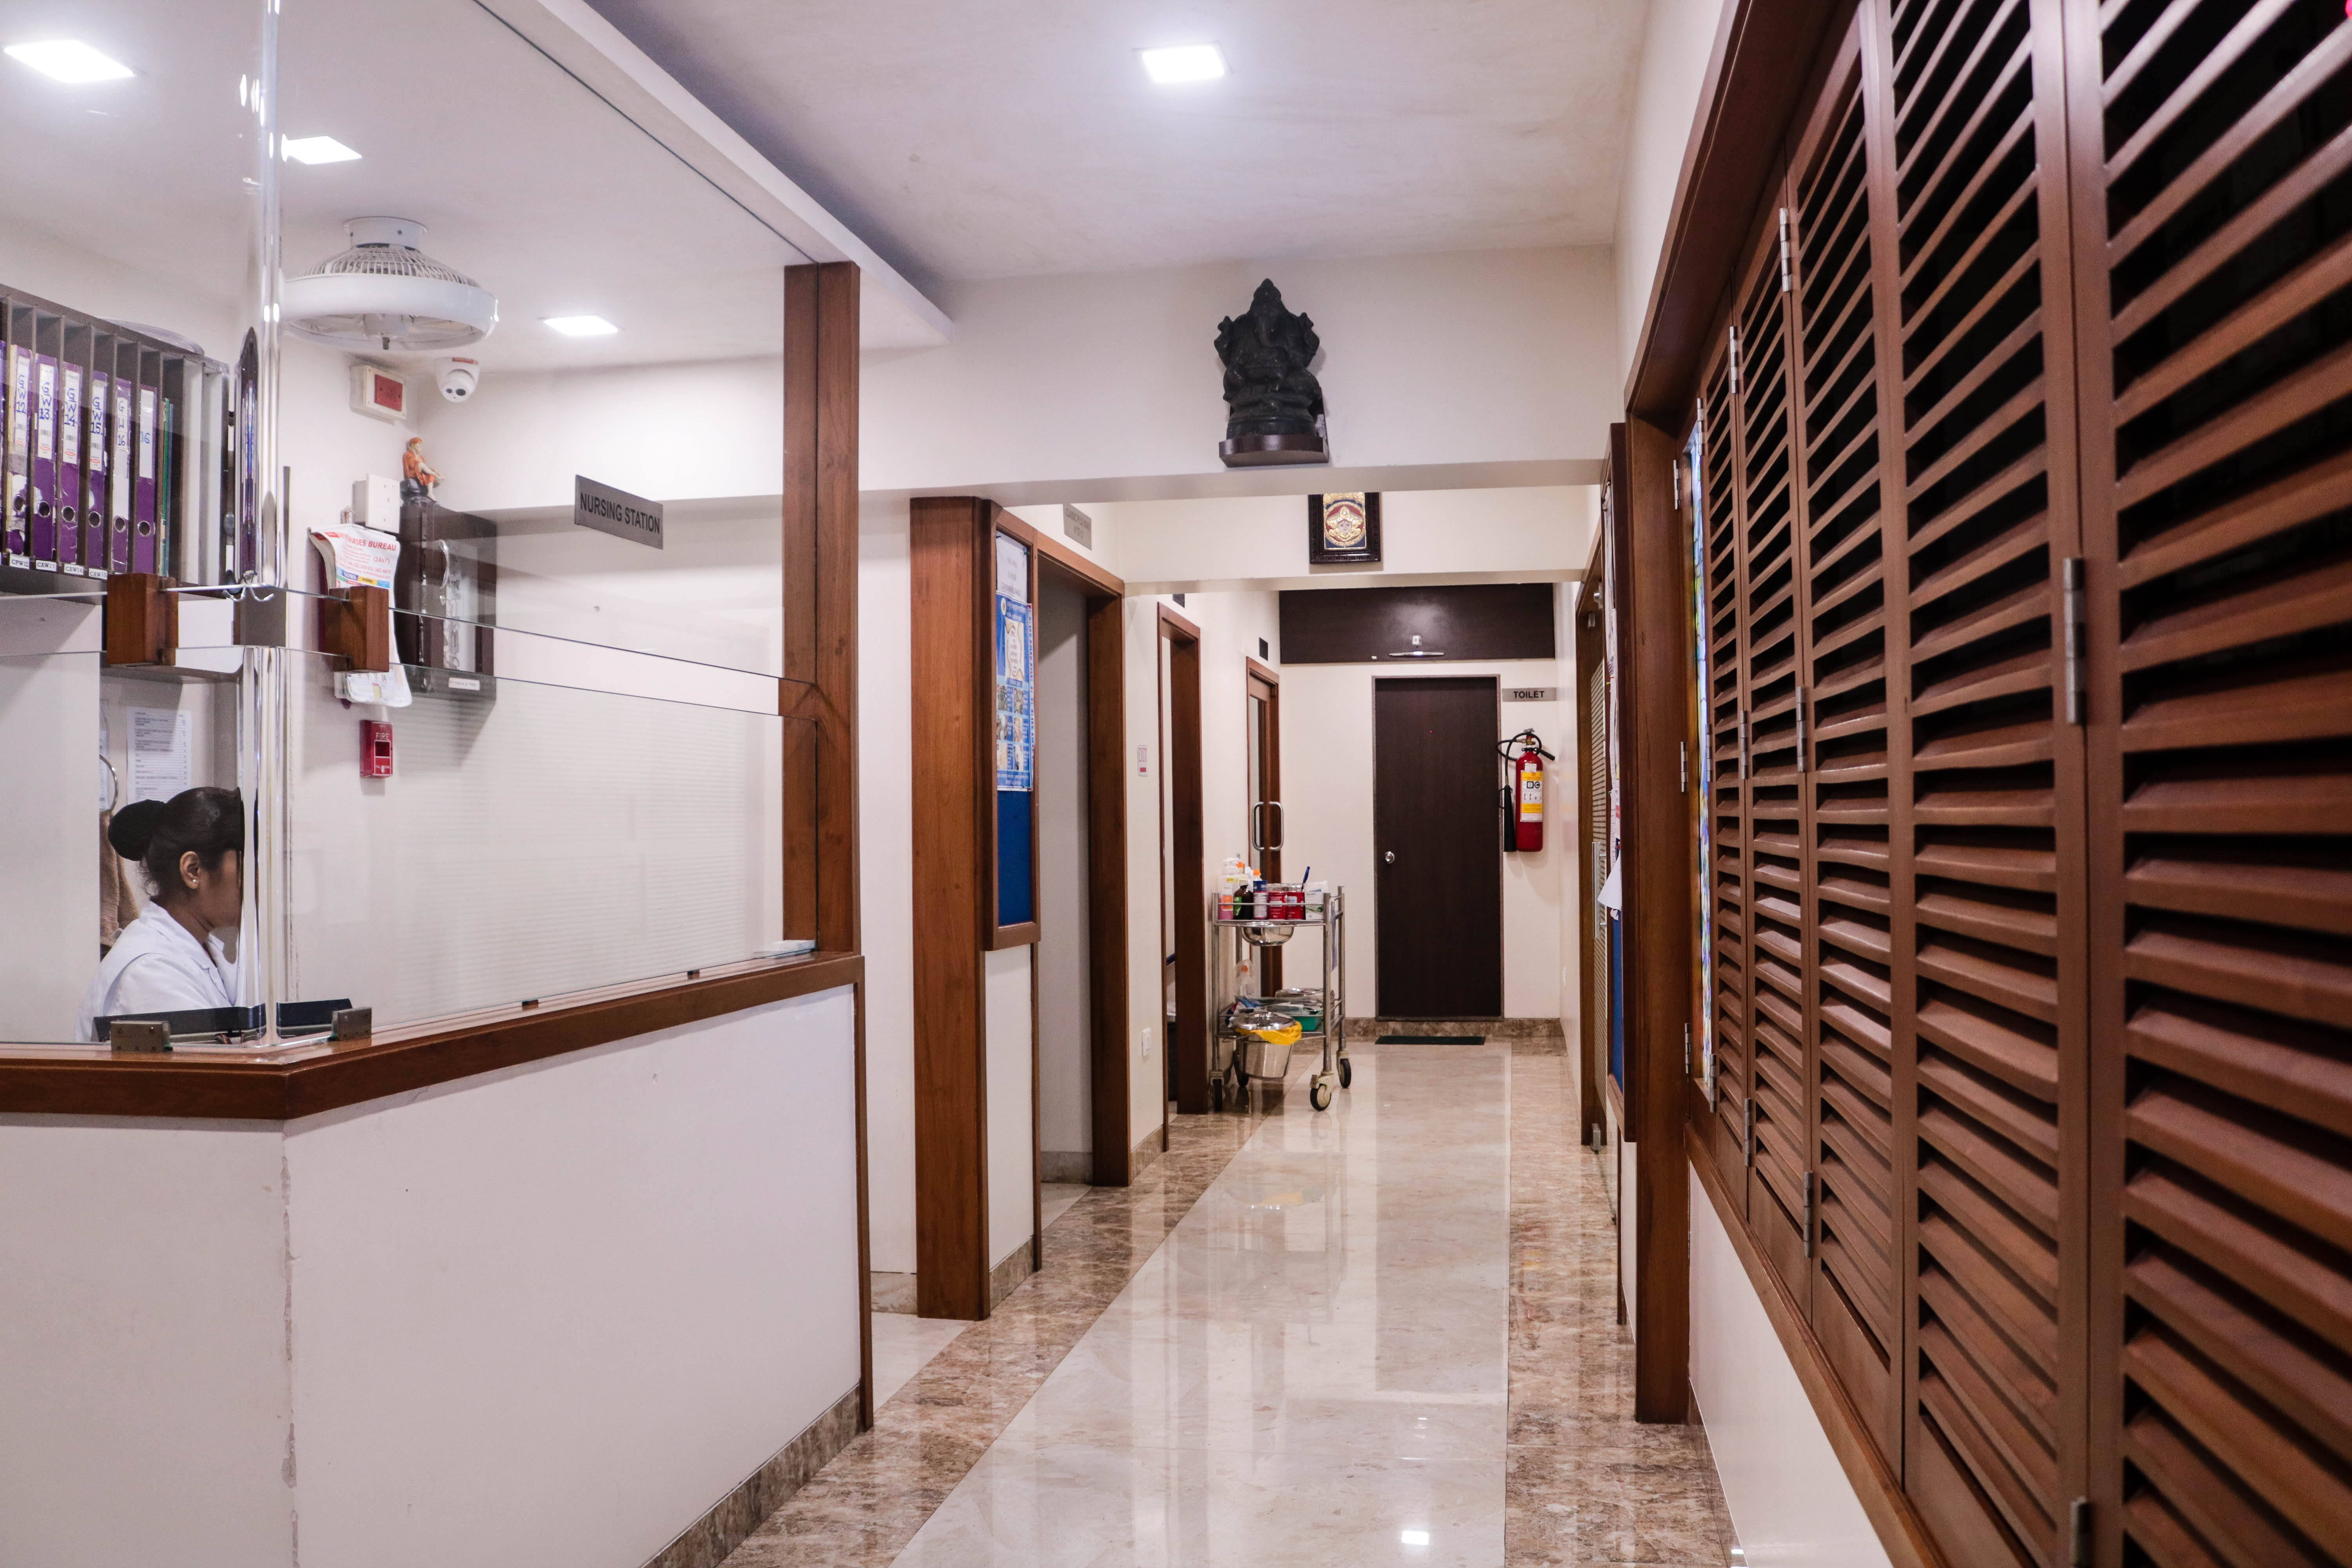 das multispeciality hospital infrastructure chembur mumbai